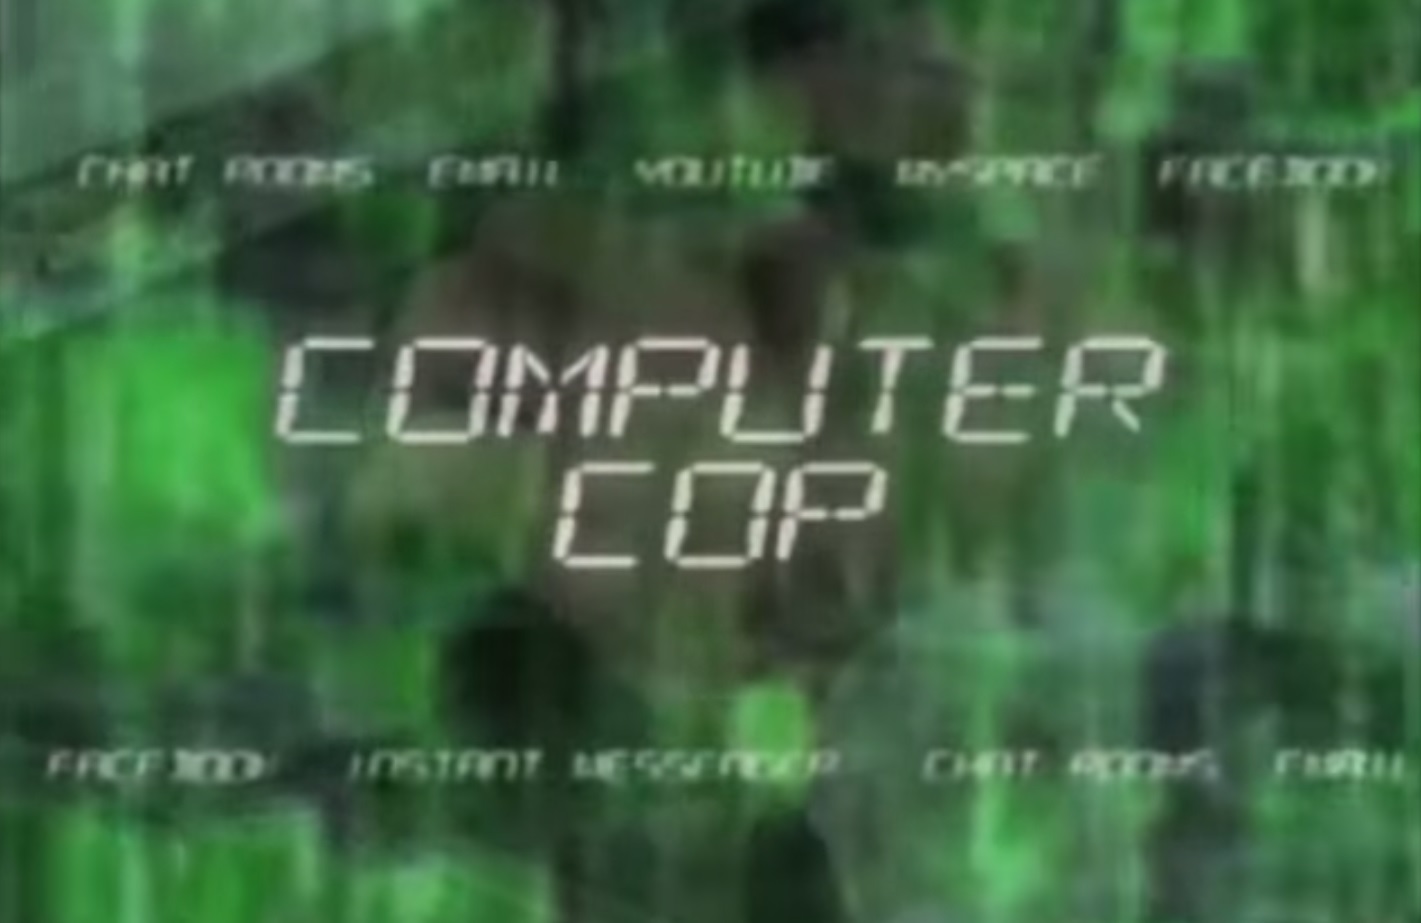 computercop spyware eff